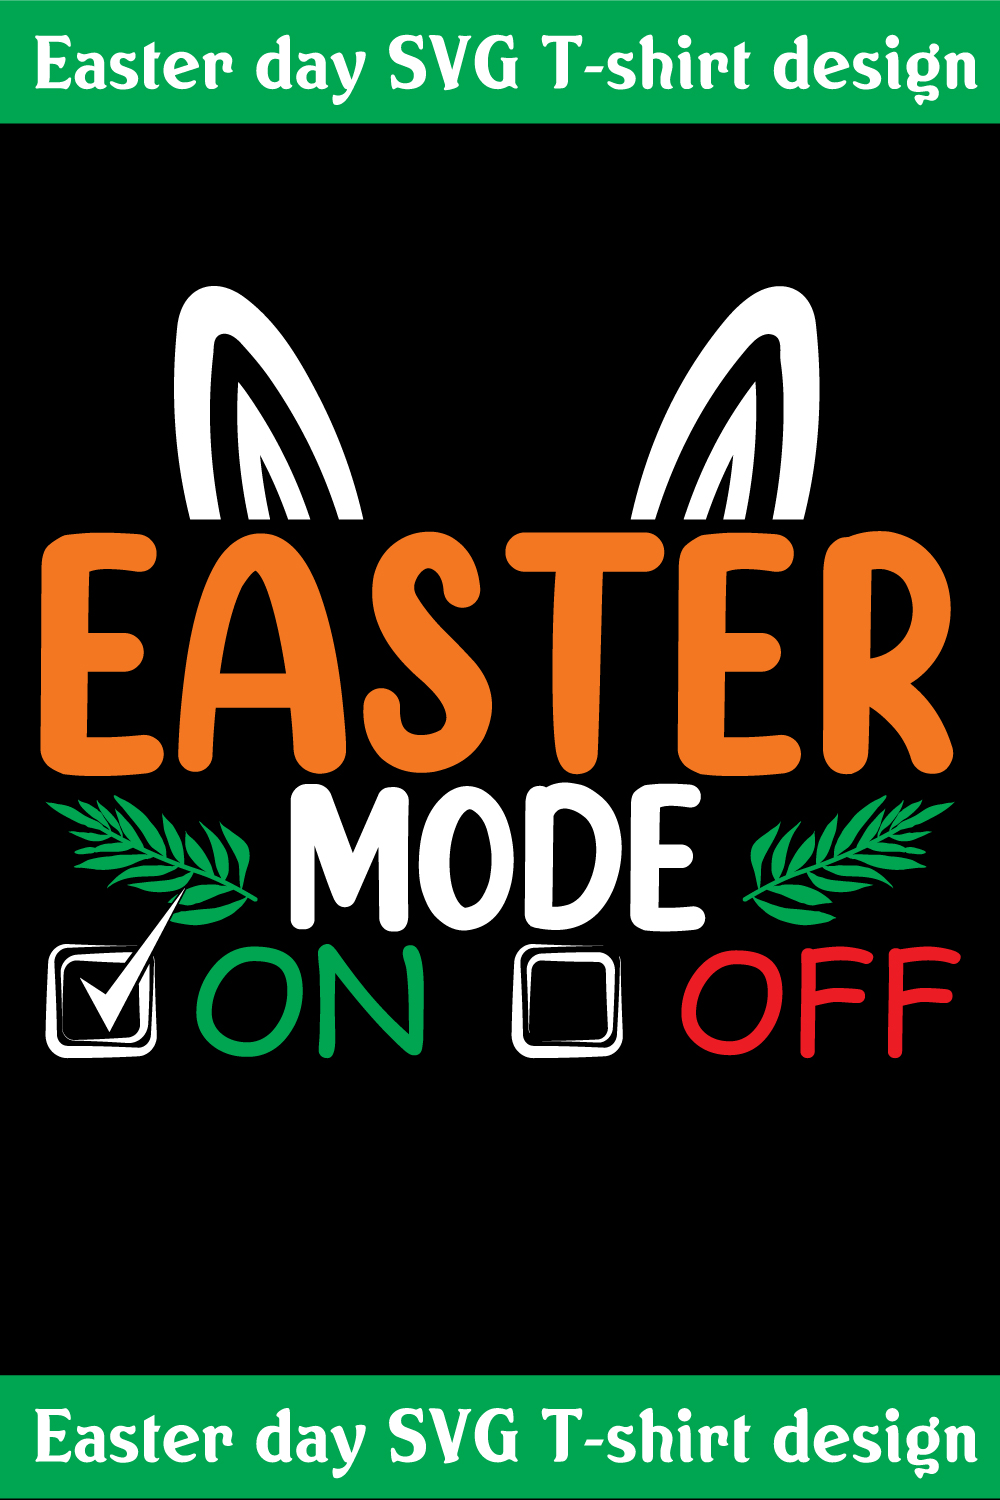 Easter mode on SVG T-shirt design pinterest preview image.